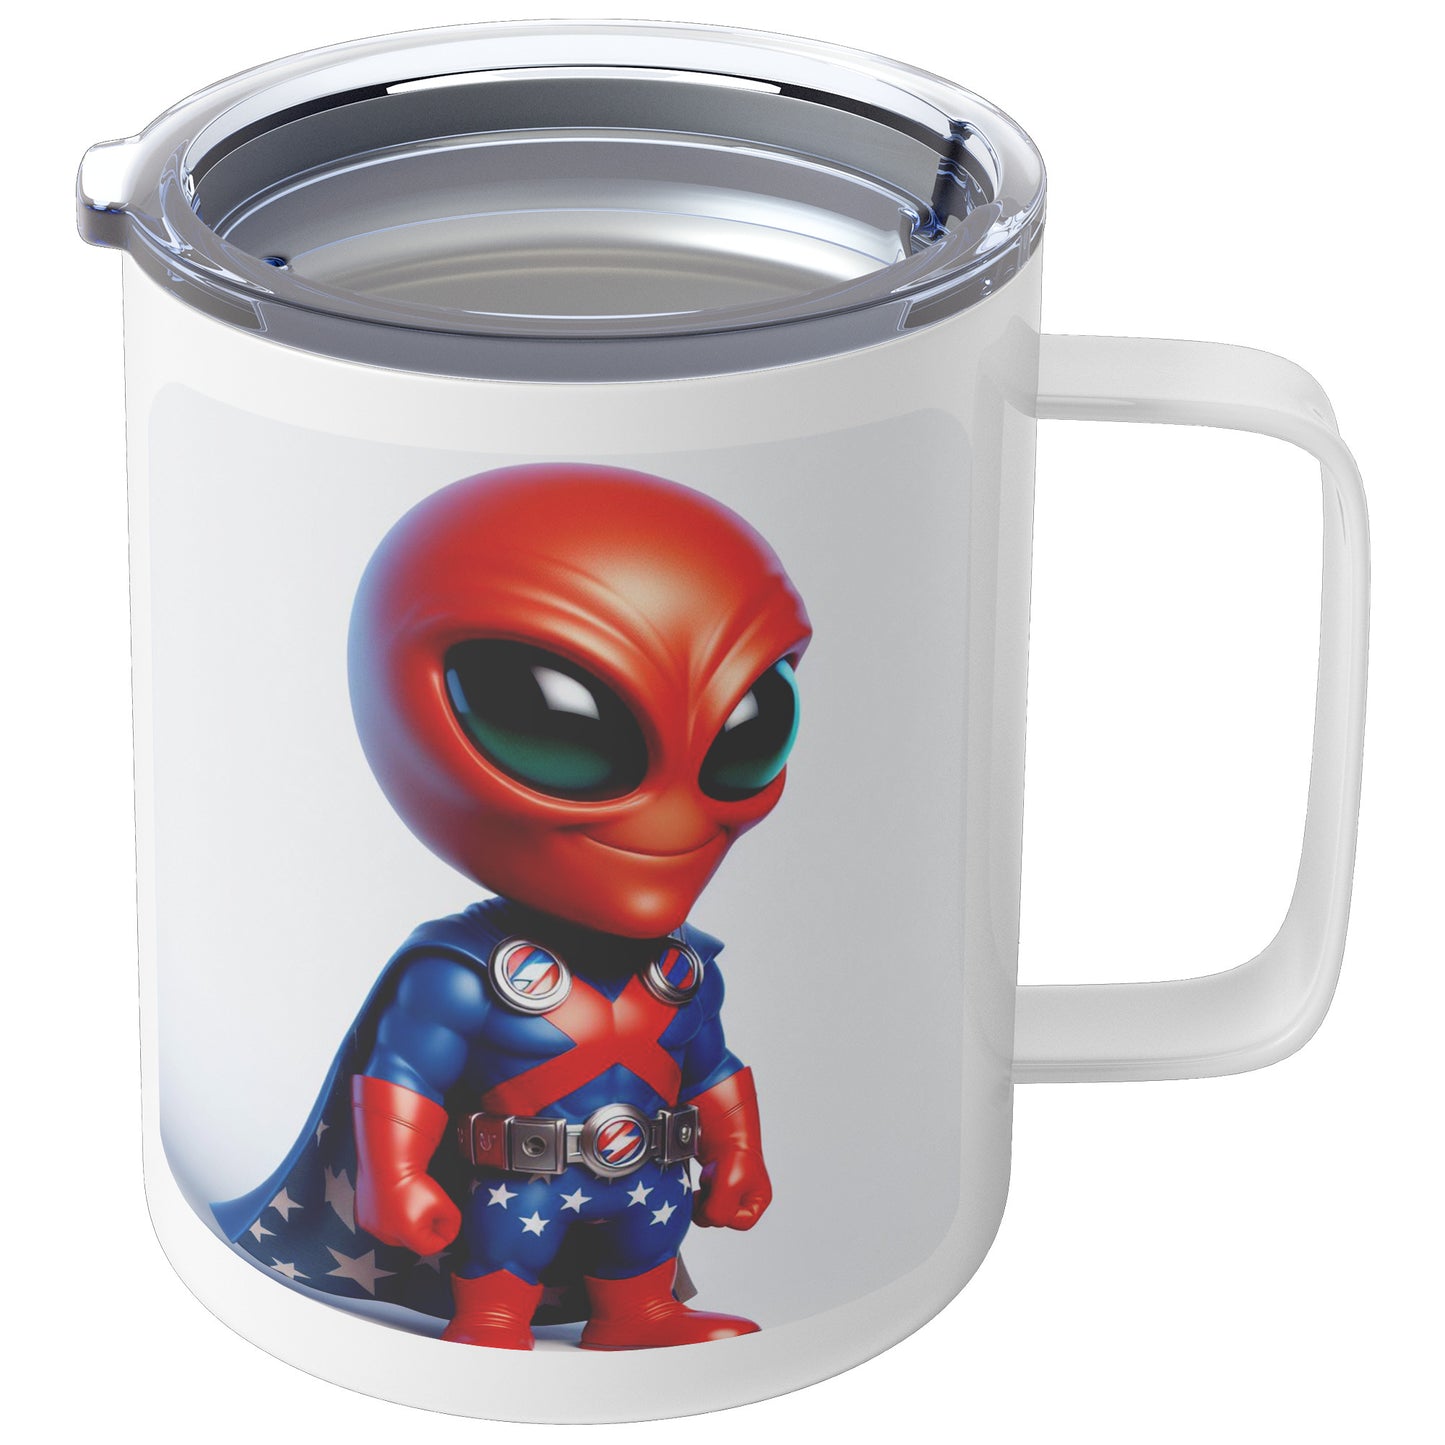 Martian Alien Caricature - Coffee Mug #9